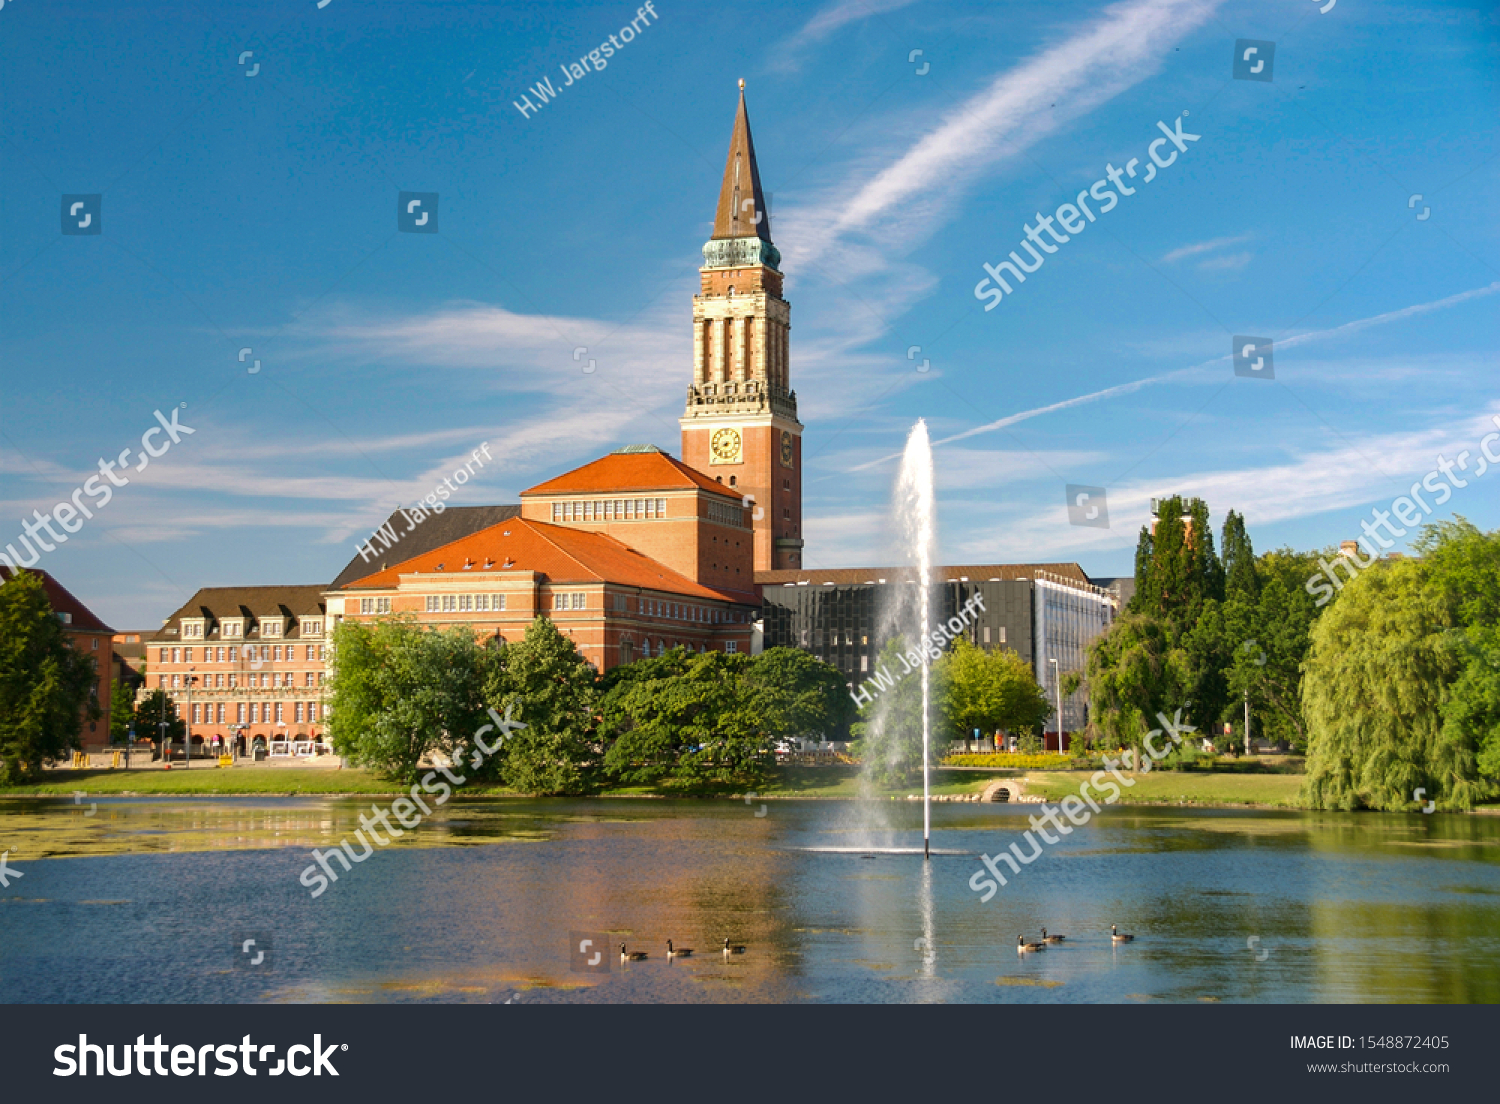 City of Kiel - Kleiner Kiel with Town Hall Tower and Opera House - Germany #1548872405